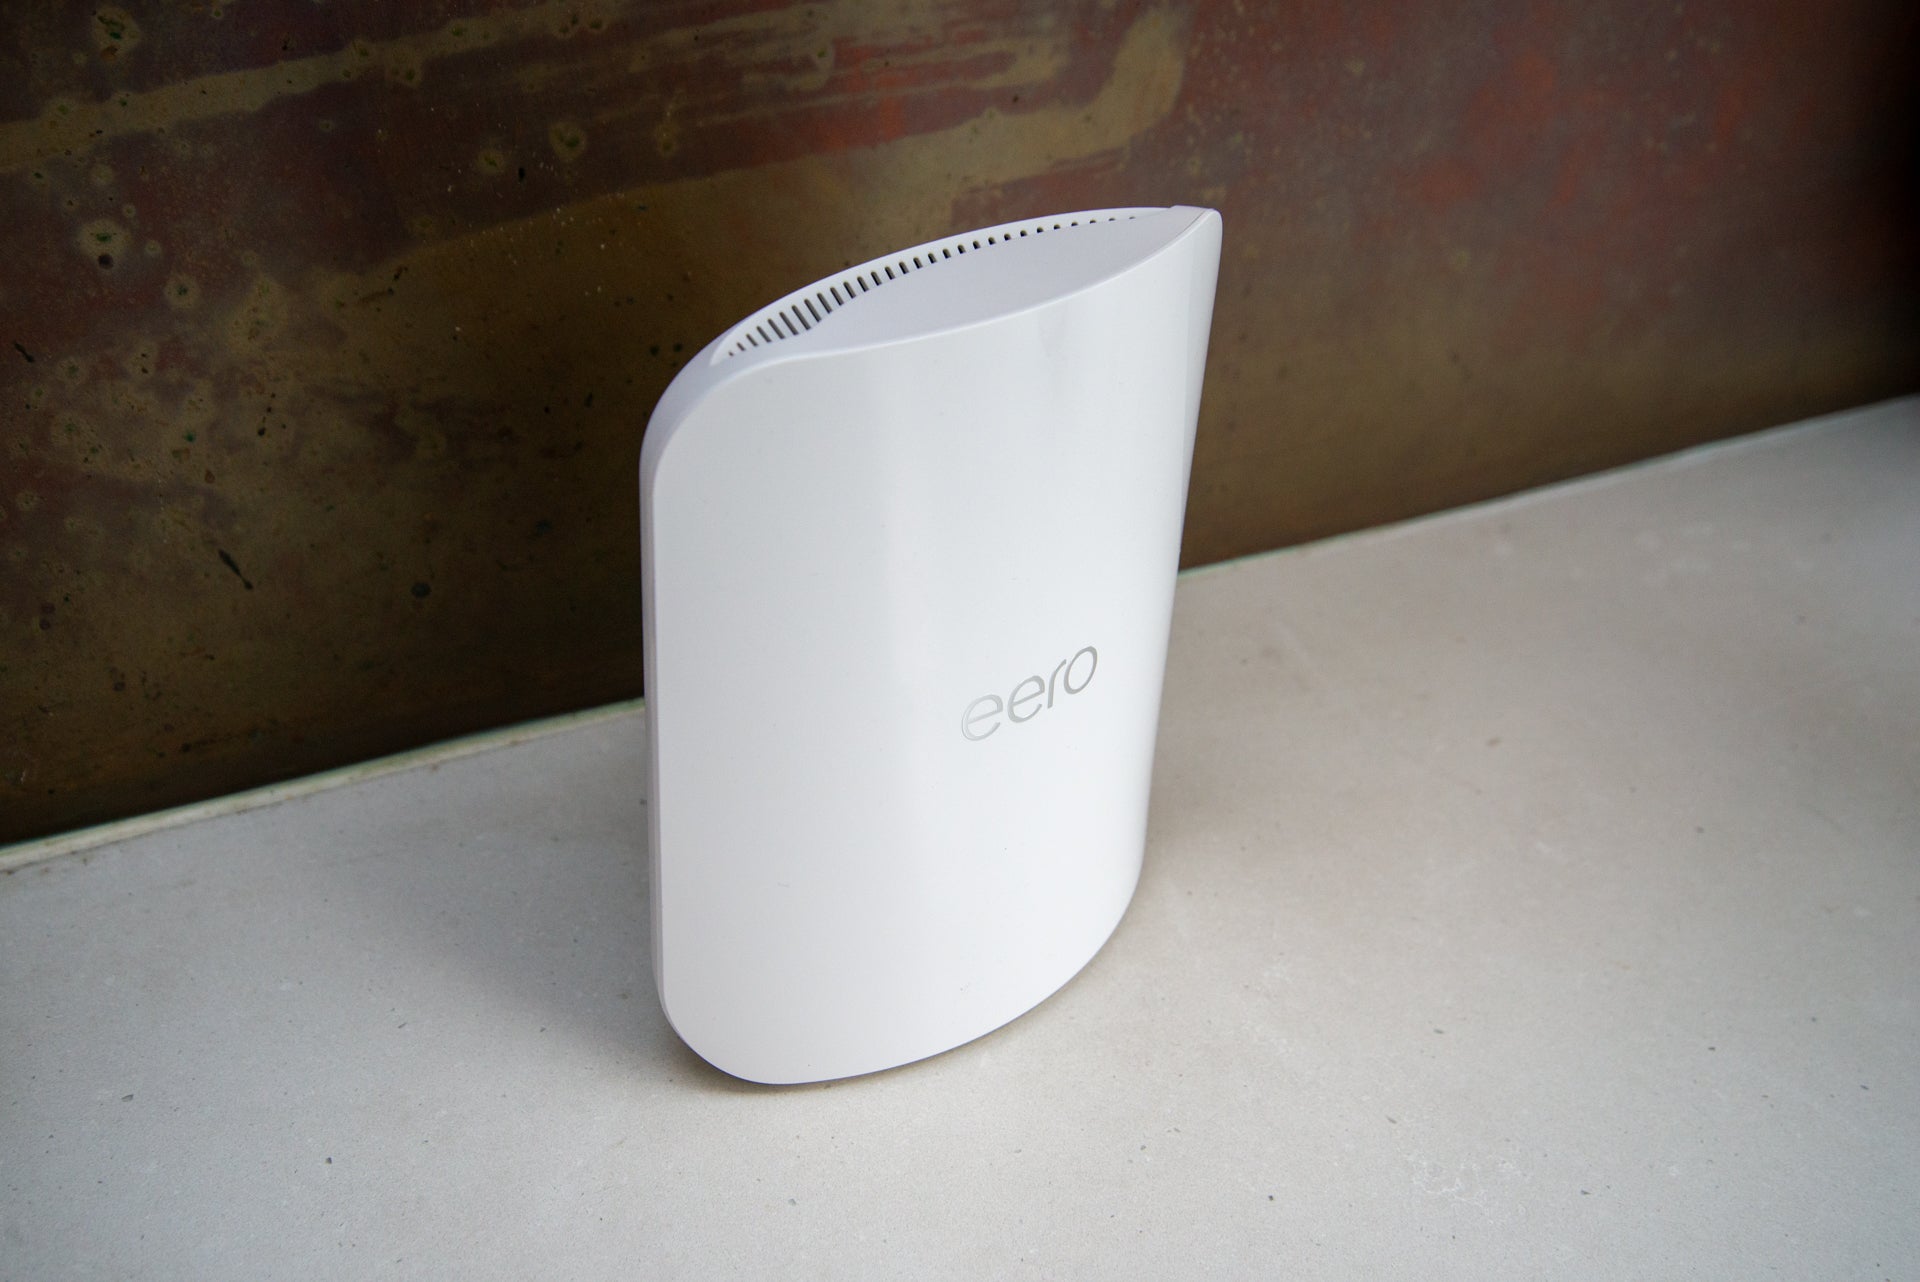 Eero Max 7 Review: Max Speed Wi-Fi - Tech Advisor